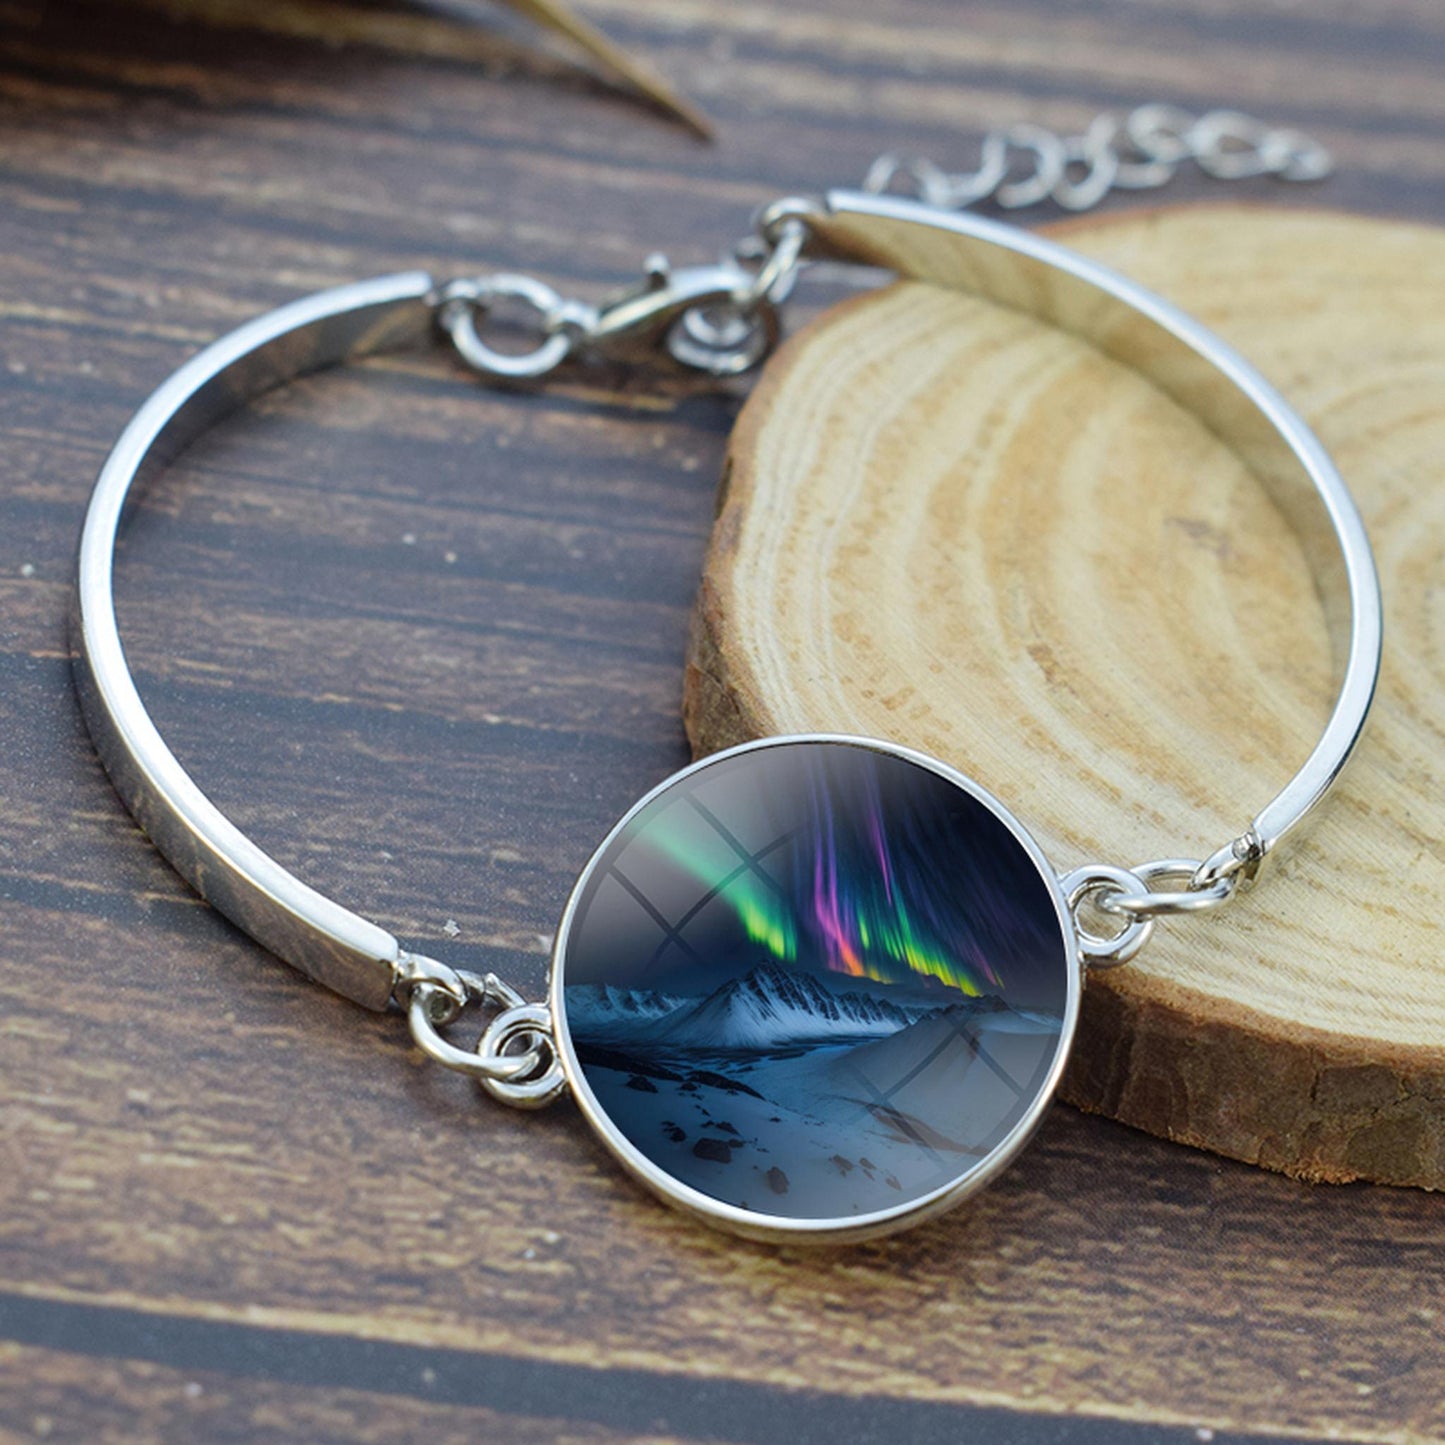 Unique Aurora Borealis Bangle Bracelet - Northern Light Jewelry - Glass Cabochon Silver Plated Bracelet - Perfect Aurora Lovers Gift 12